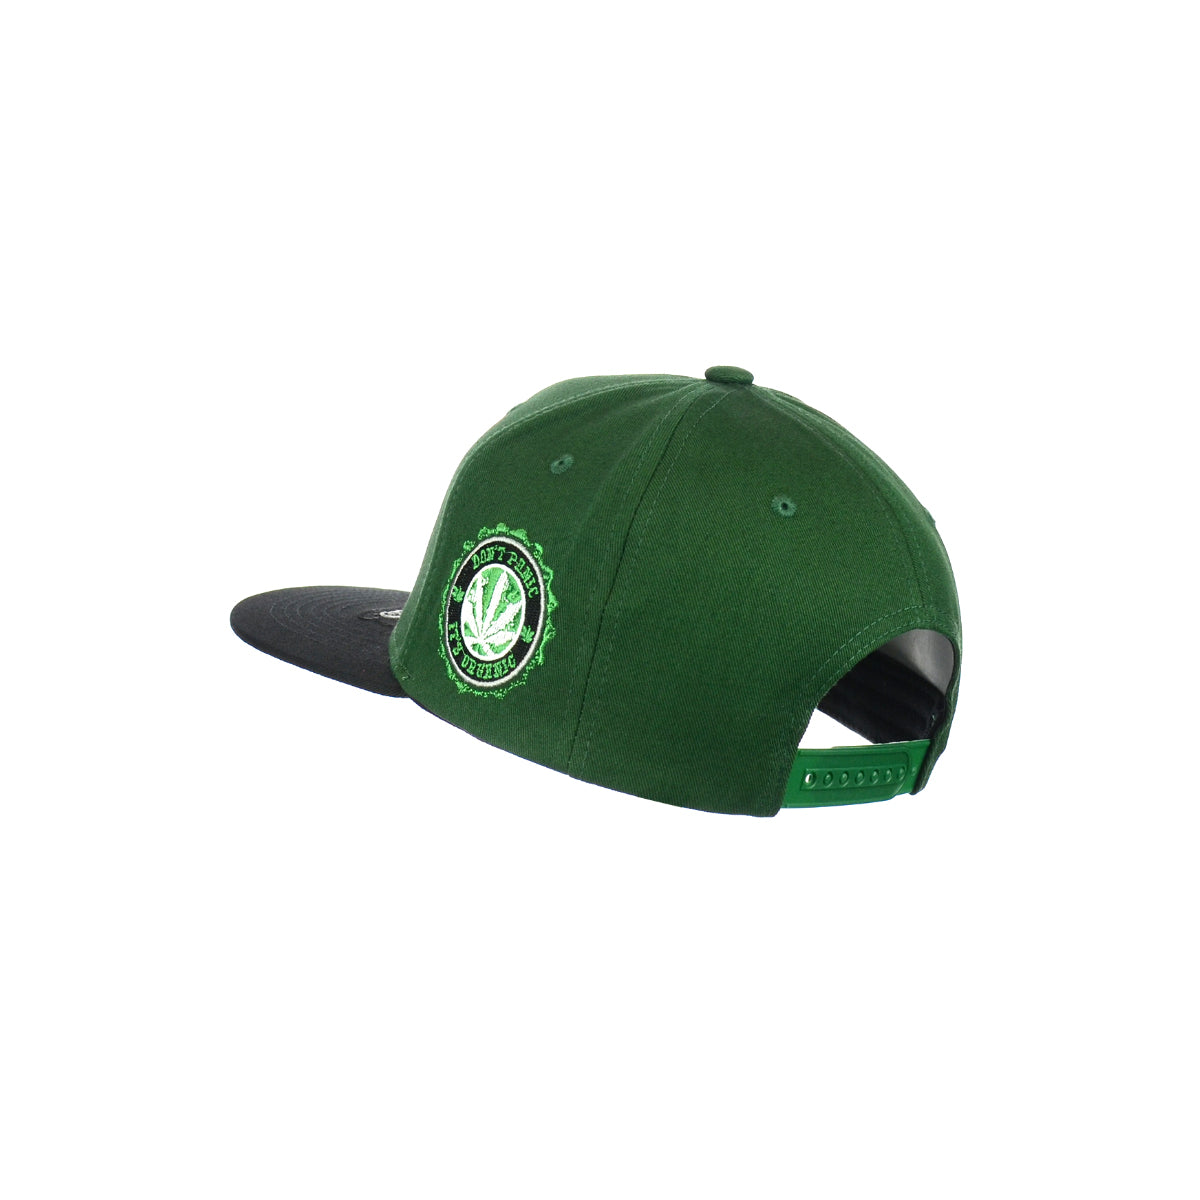 Snapback "Marijuana Dank Nuggs" Hat Embroidered